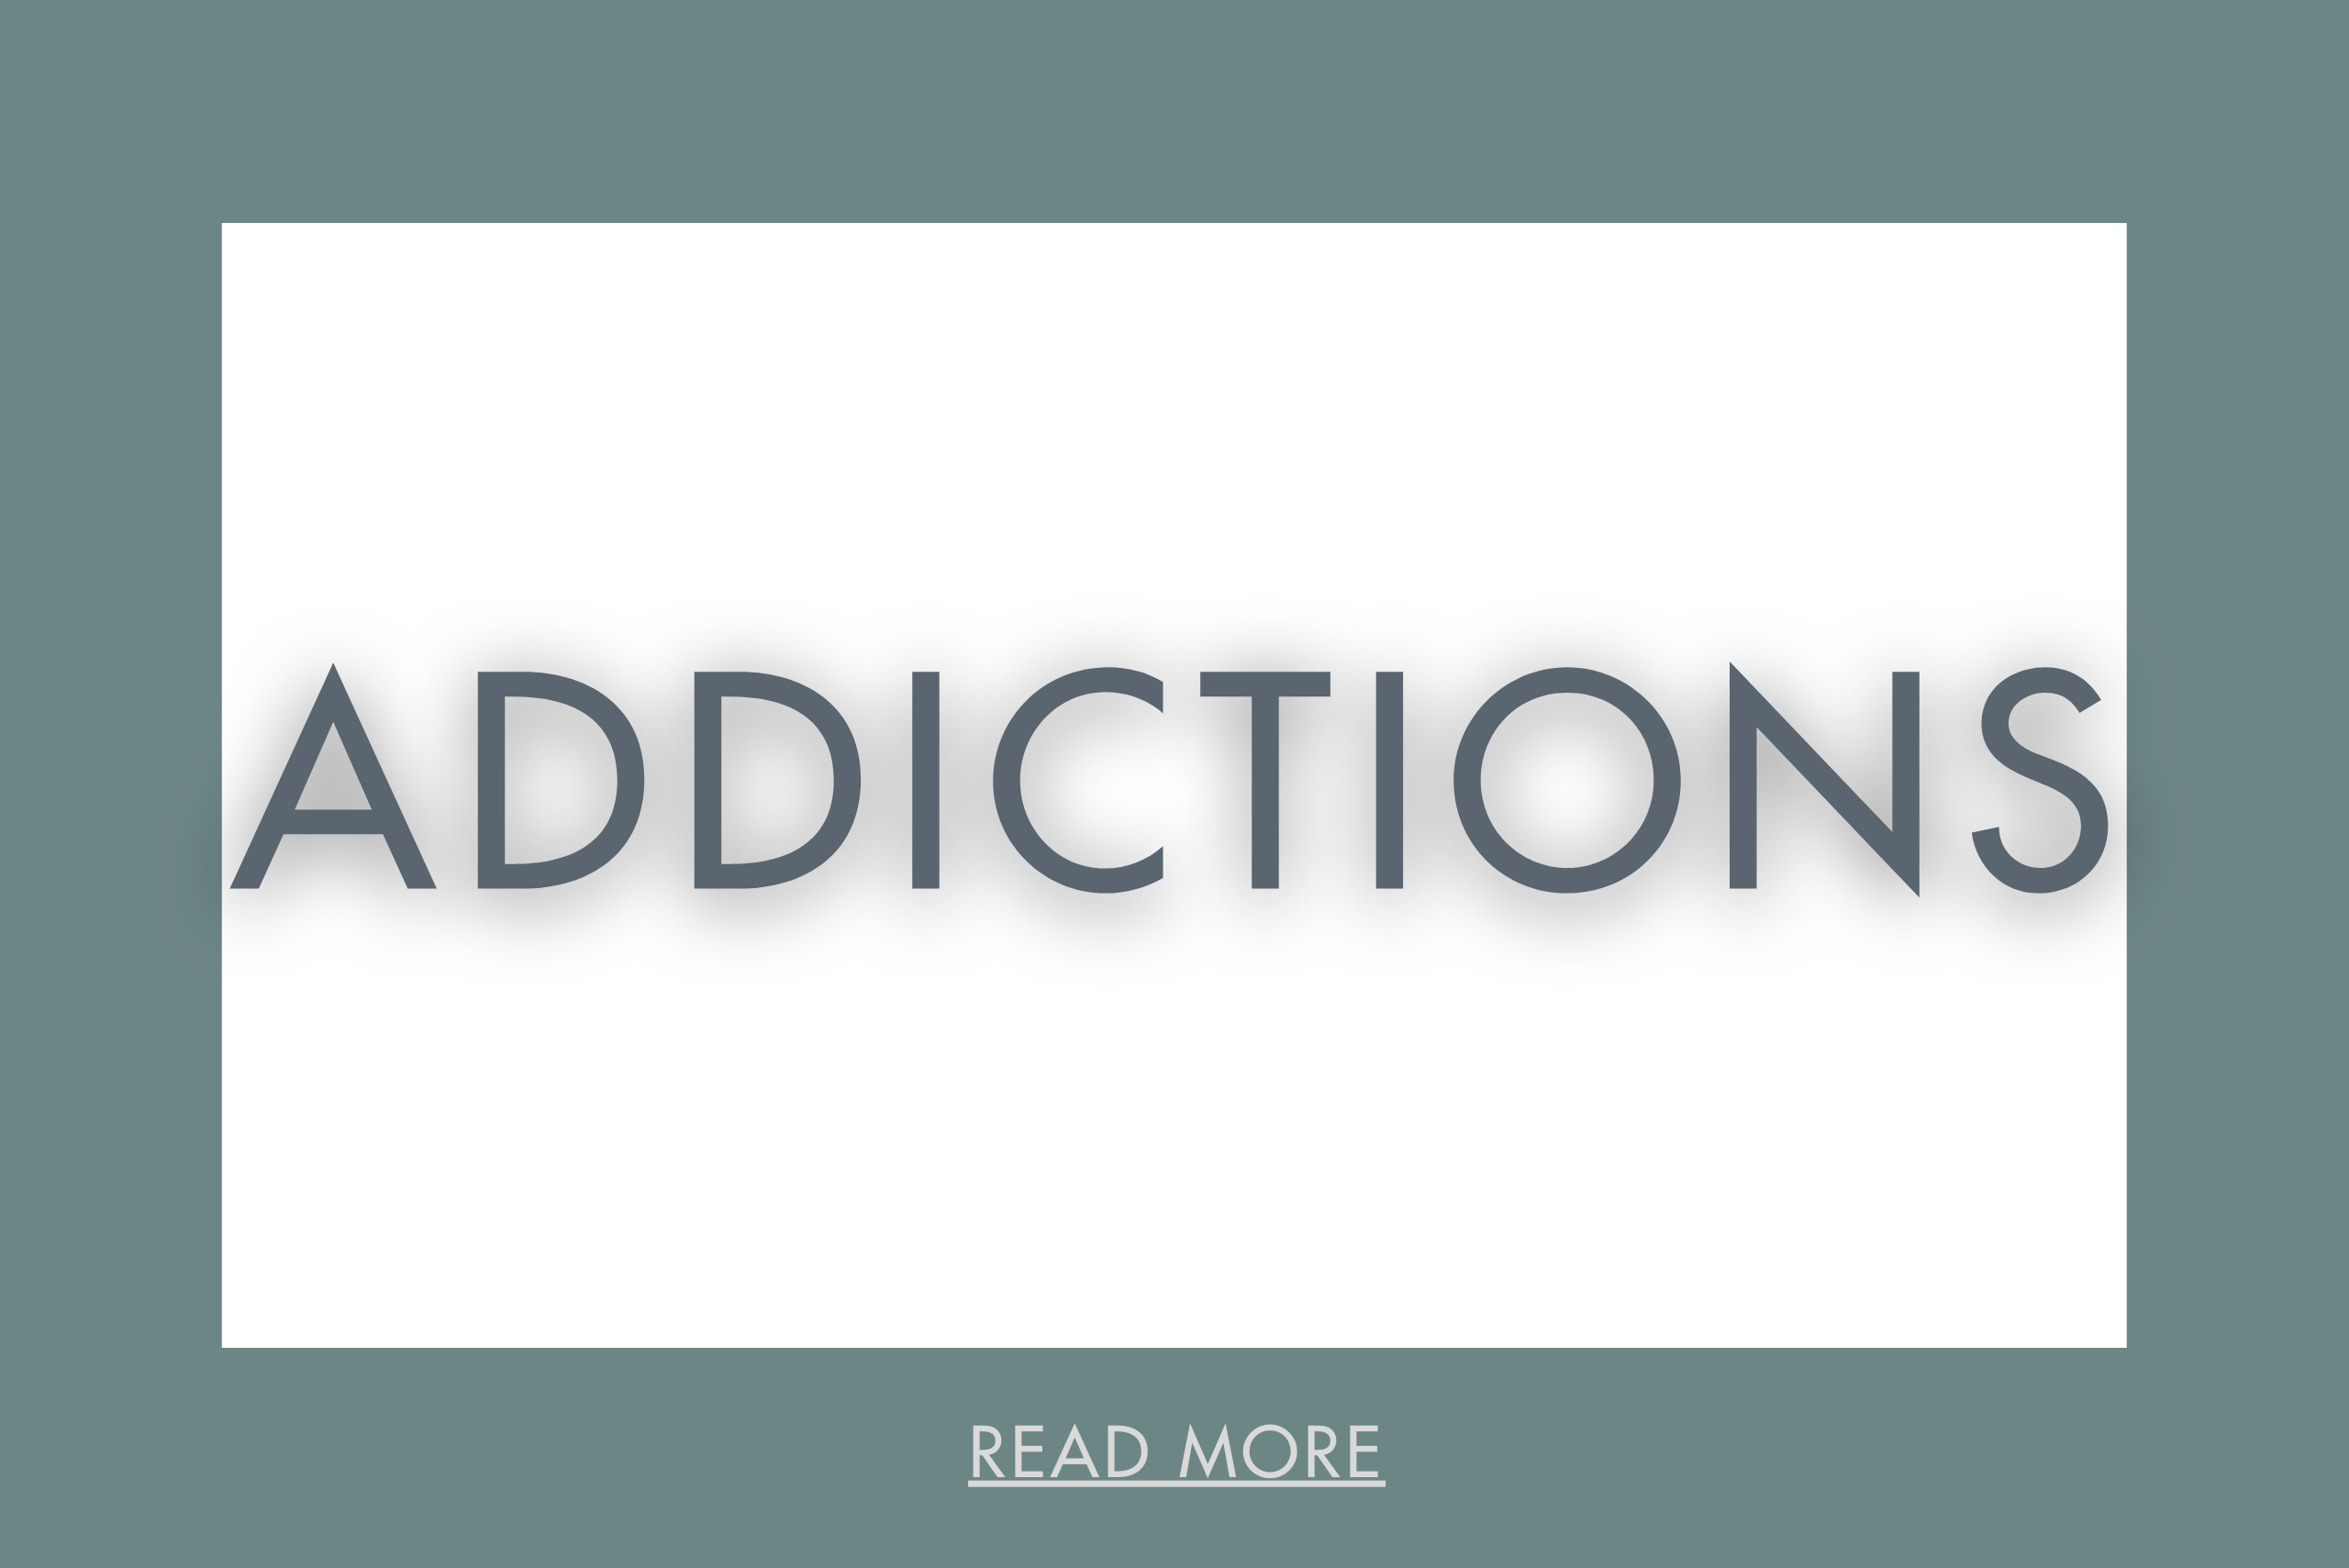 Addiction disorders